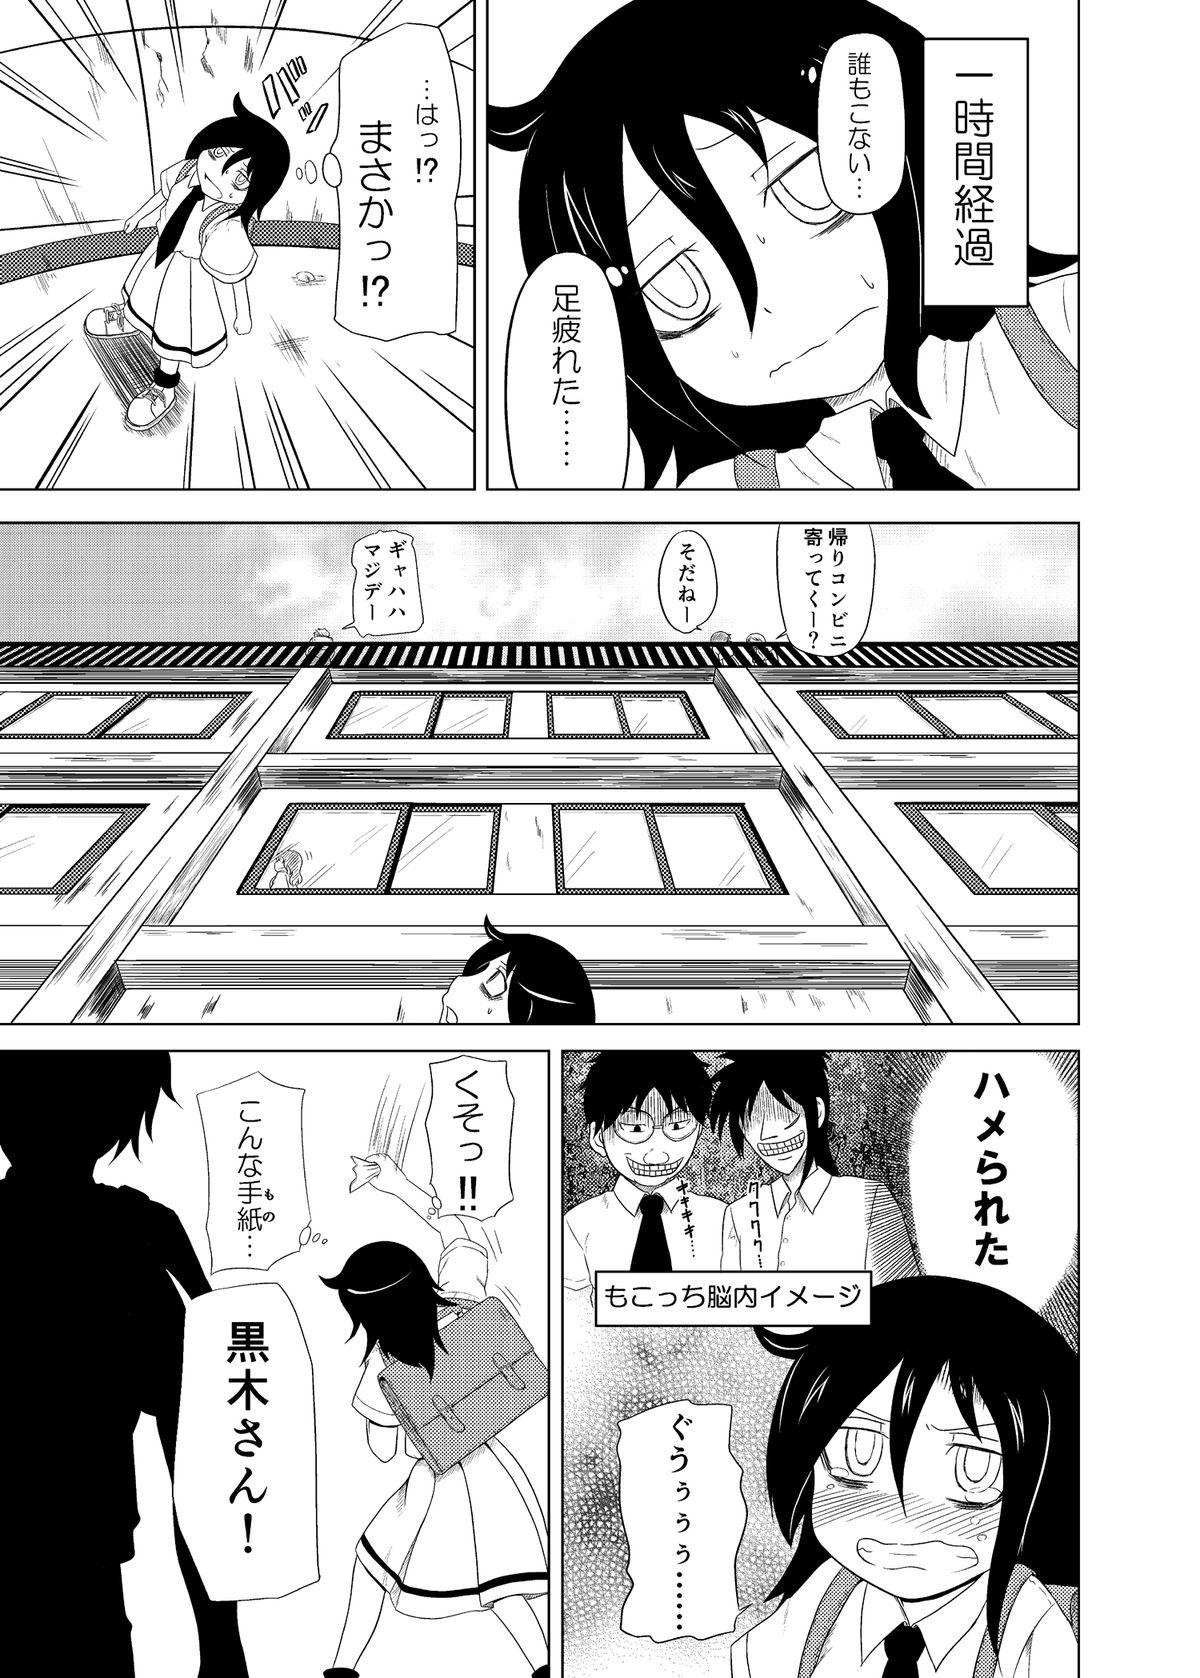 Topless Watashi ga Moteta no wa Dou Kangaetemo Omaera no Okage! - Its not my fault that im not popular Hard Core Sex - Page 6